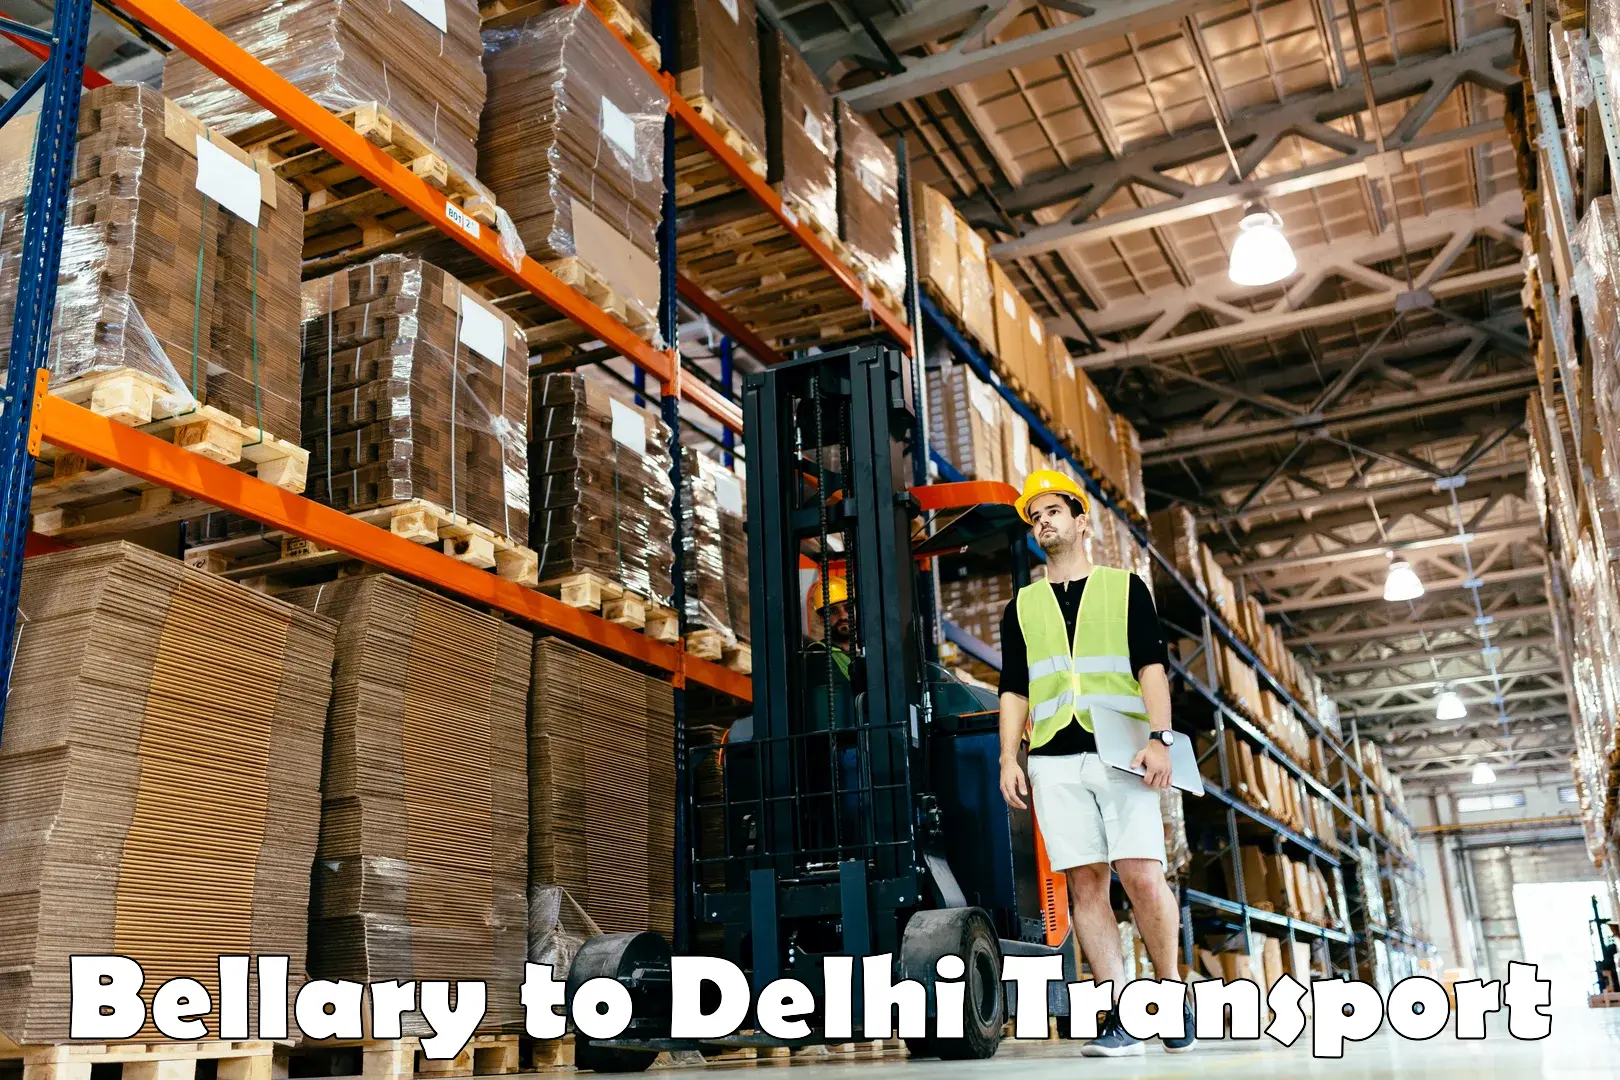 Bike shipping service Bellary to Delhi